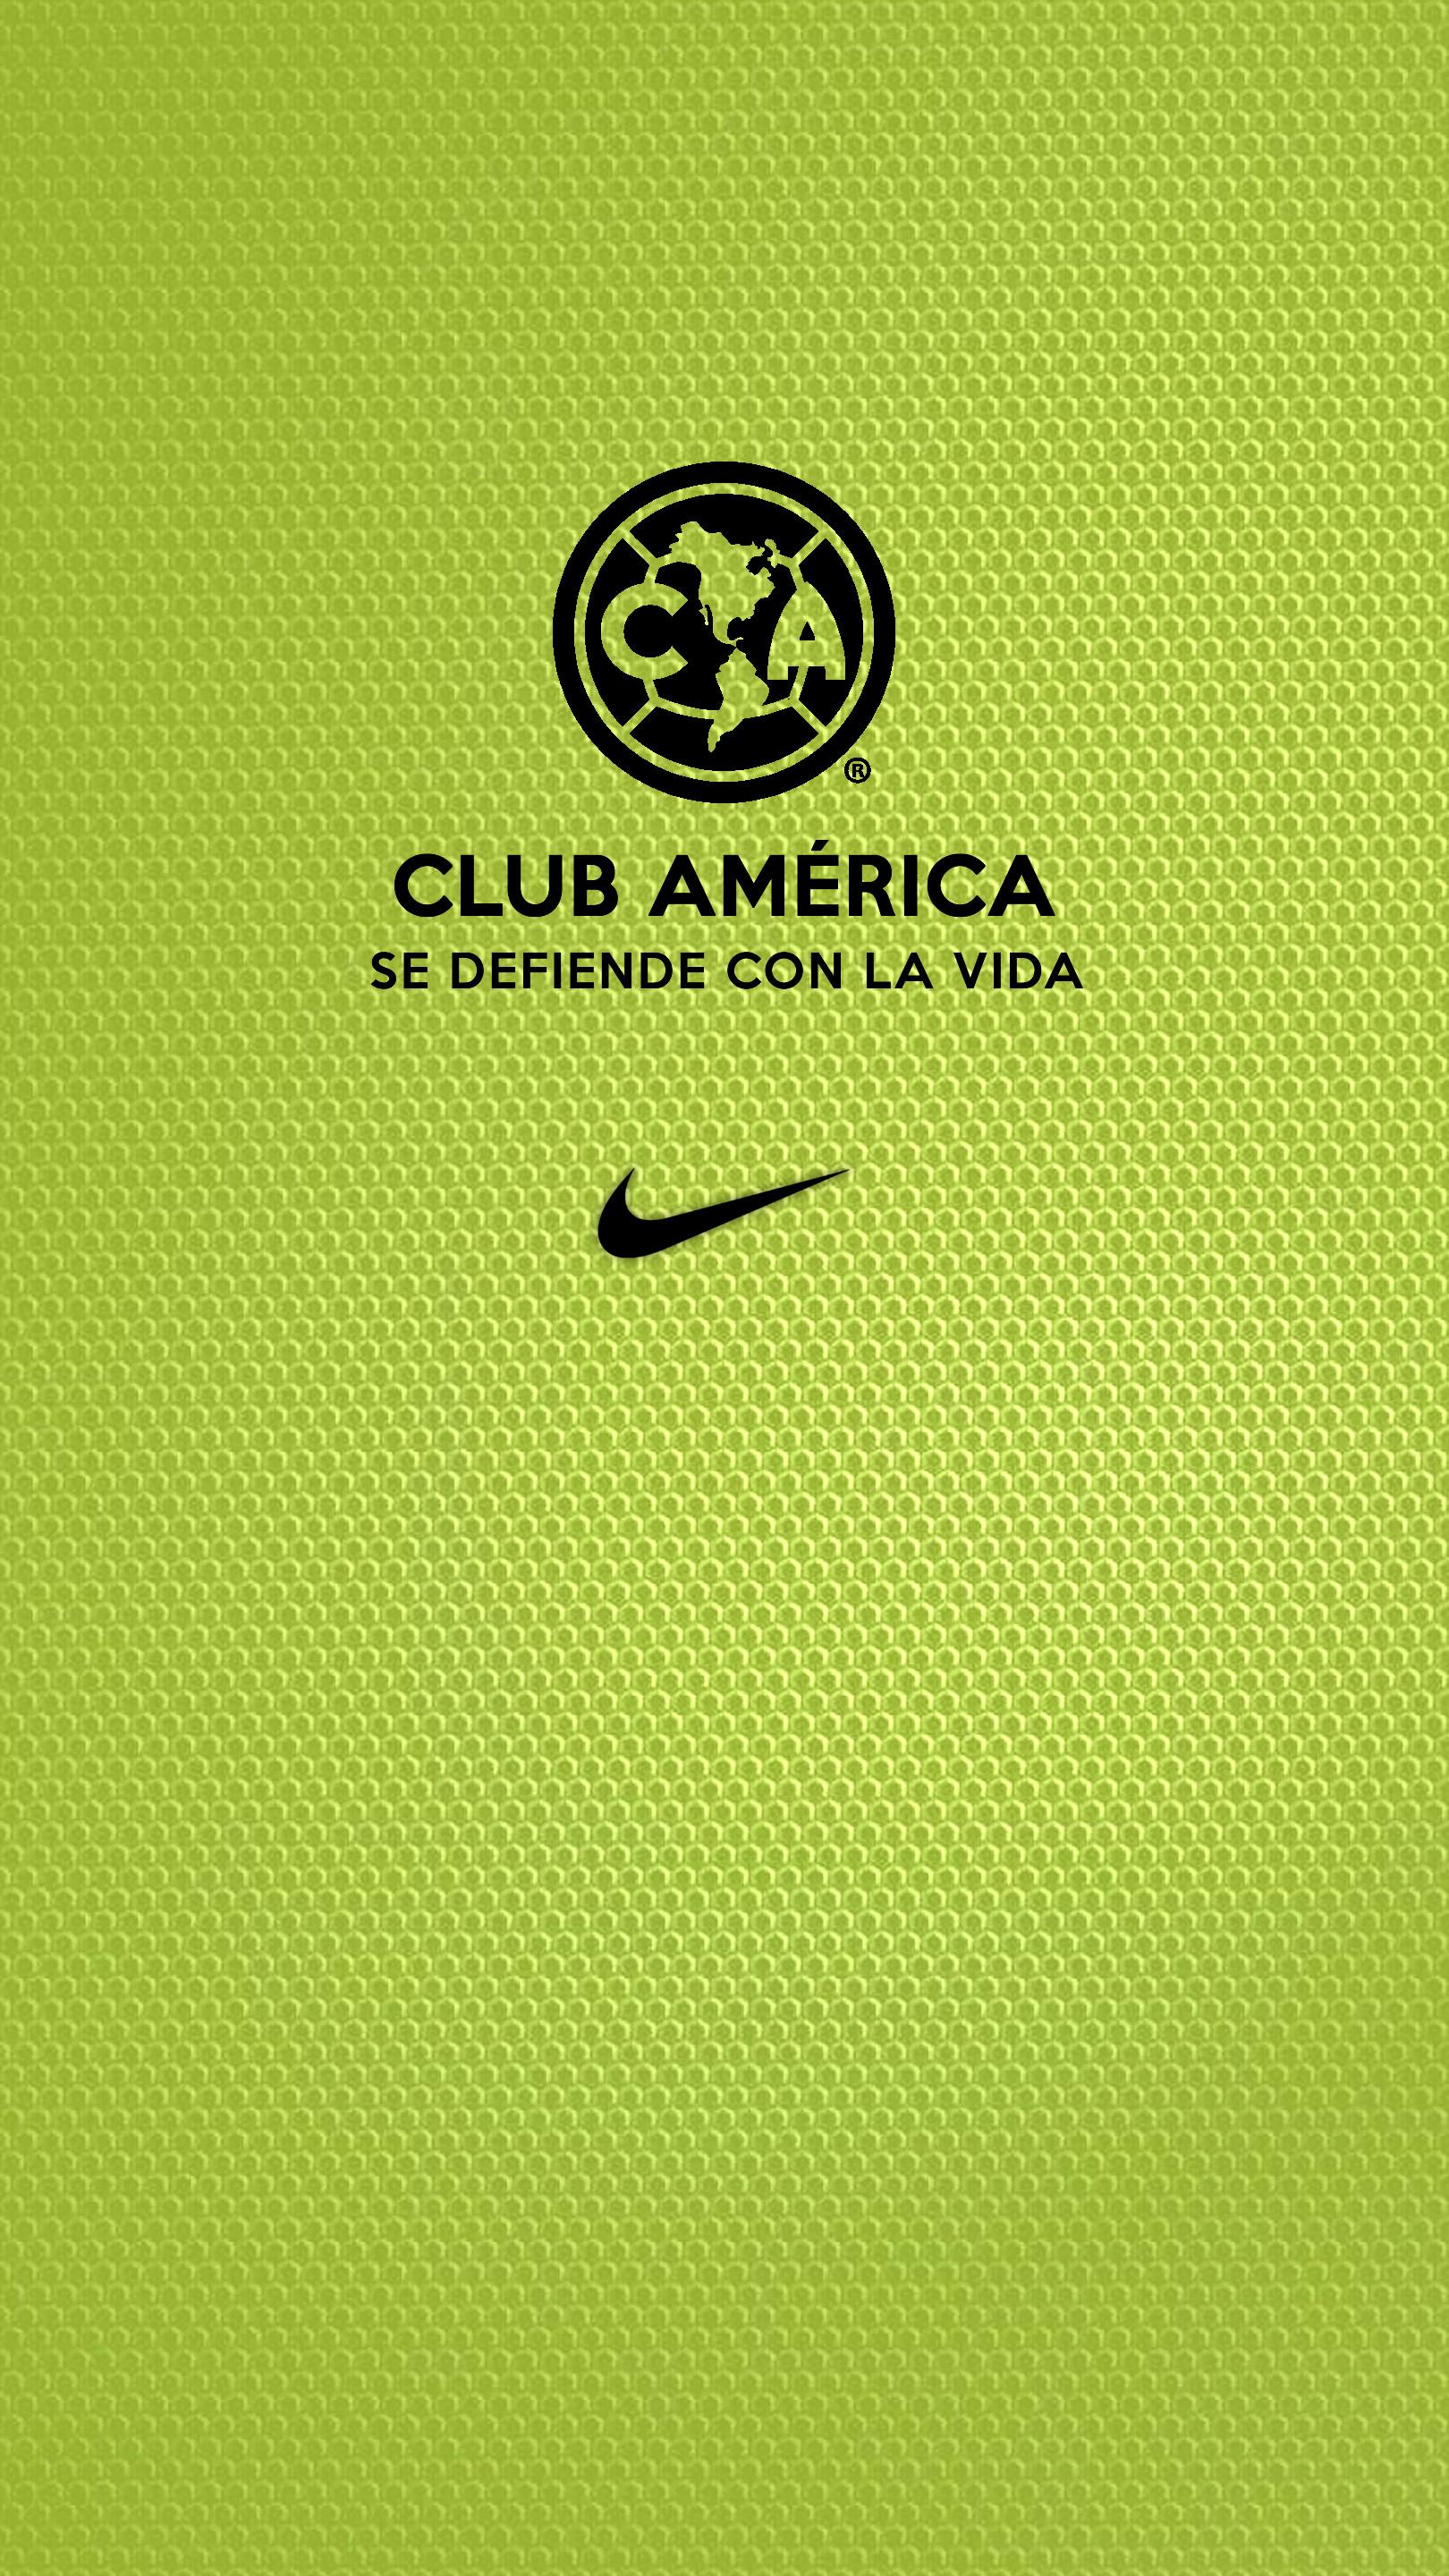 Club America Soccer Wallpapers Top Free Club America Soccer Backgrounds Wallpaperaccess 7543